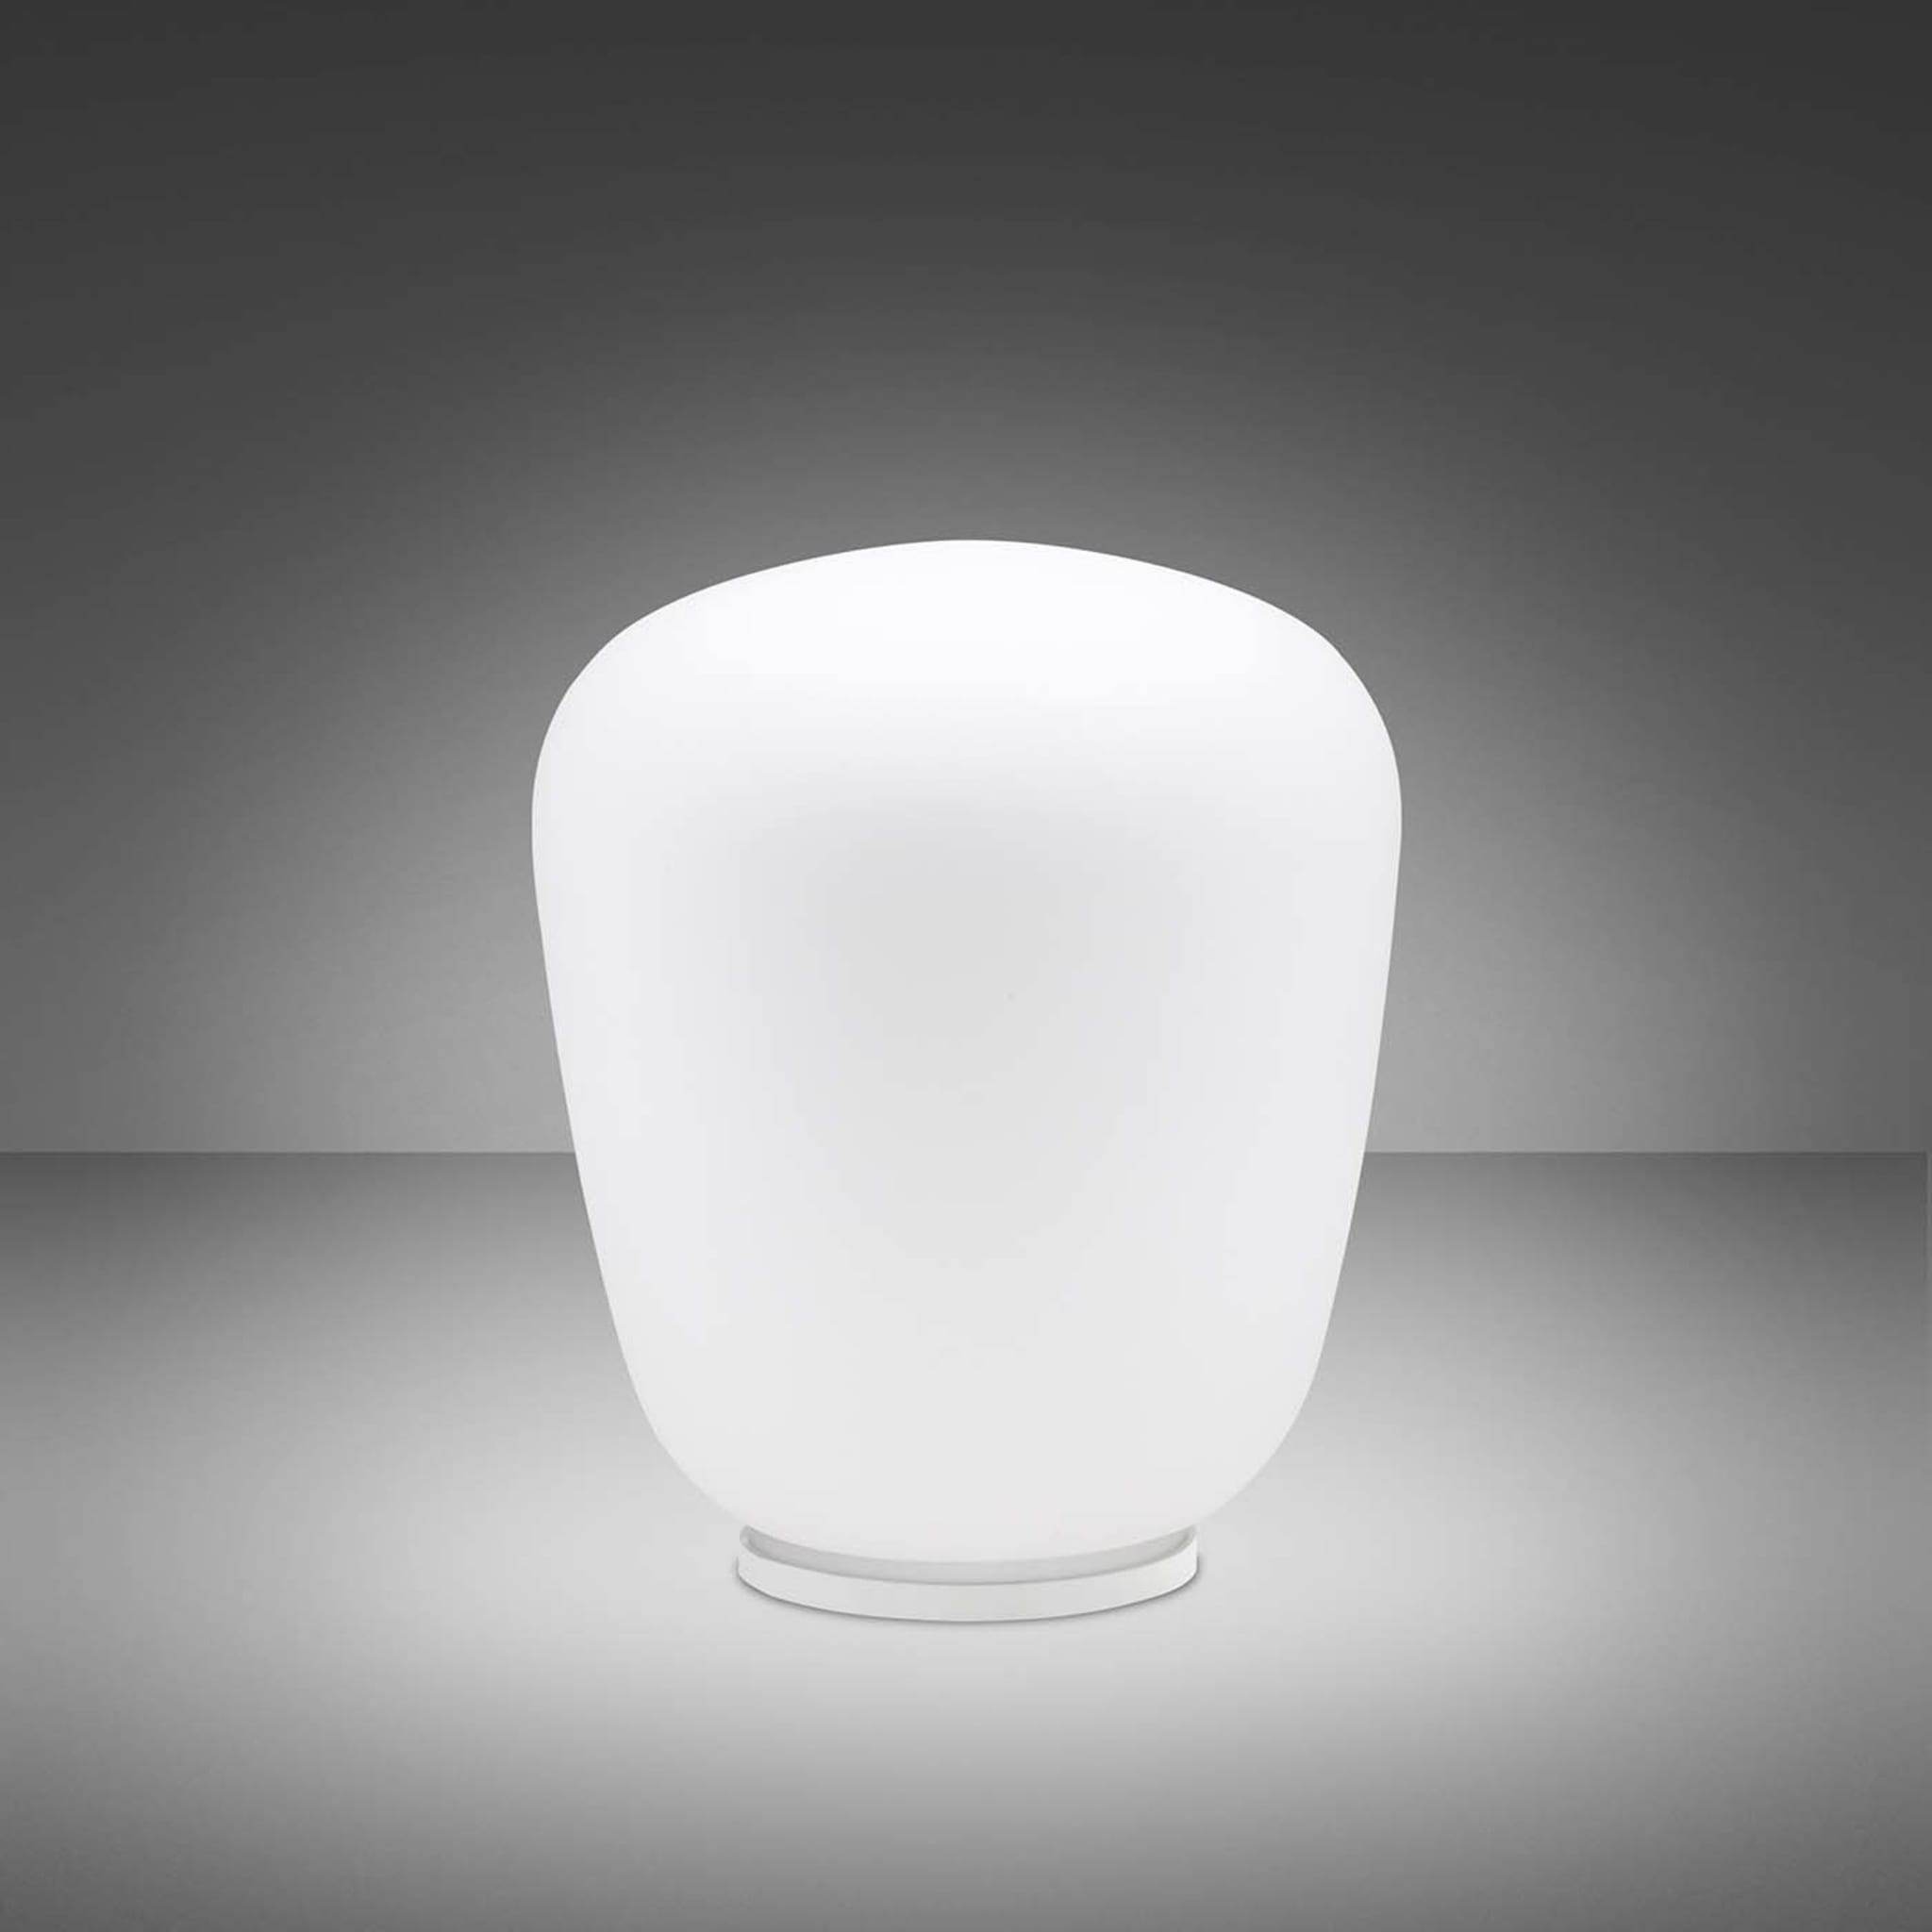 Lumi Baka Table Lamp by Saggia & Sommella - Alternative view 1